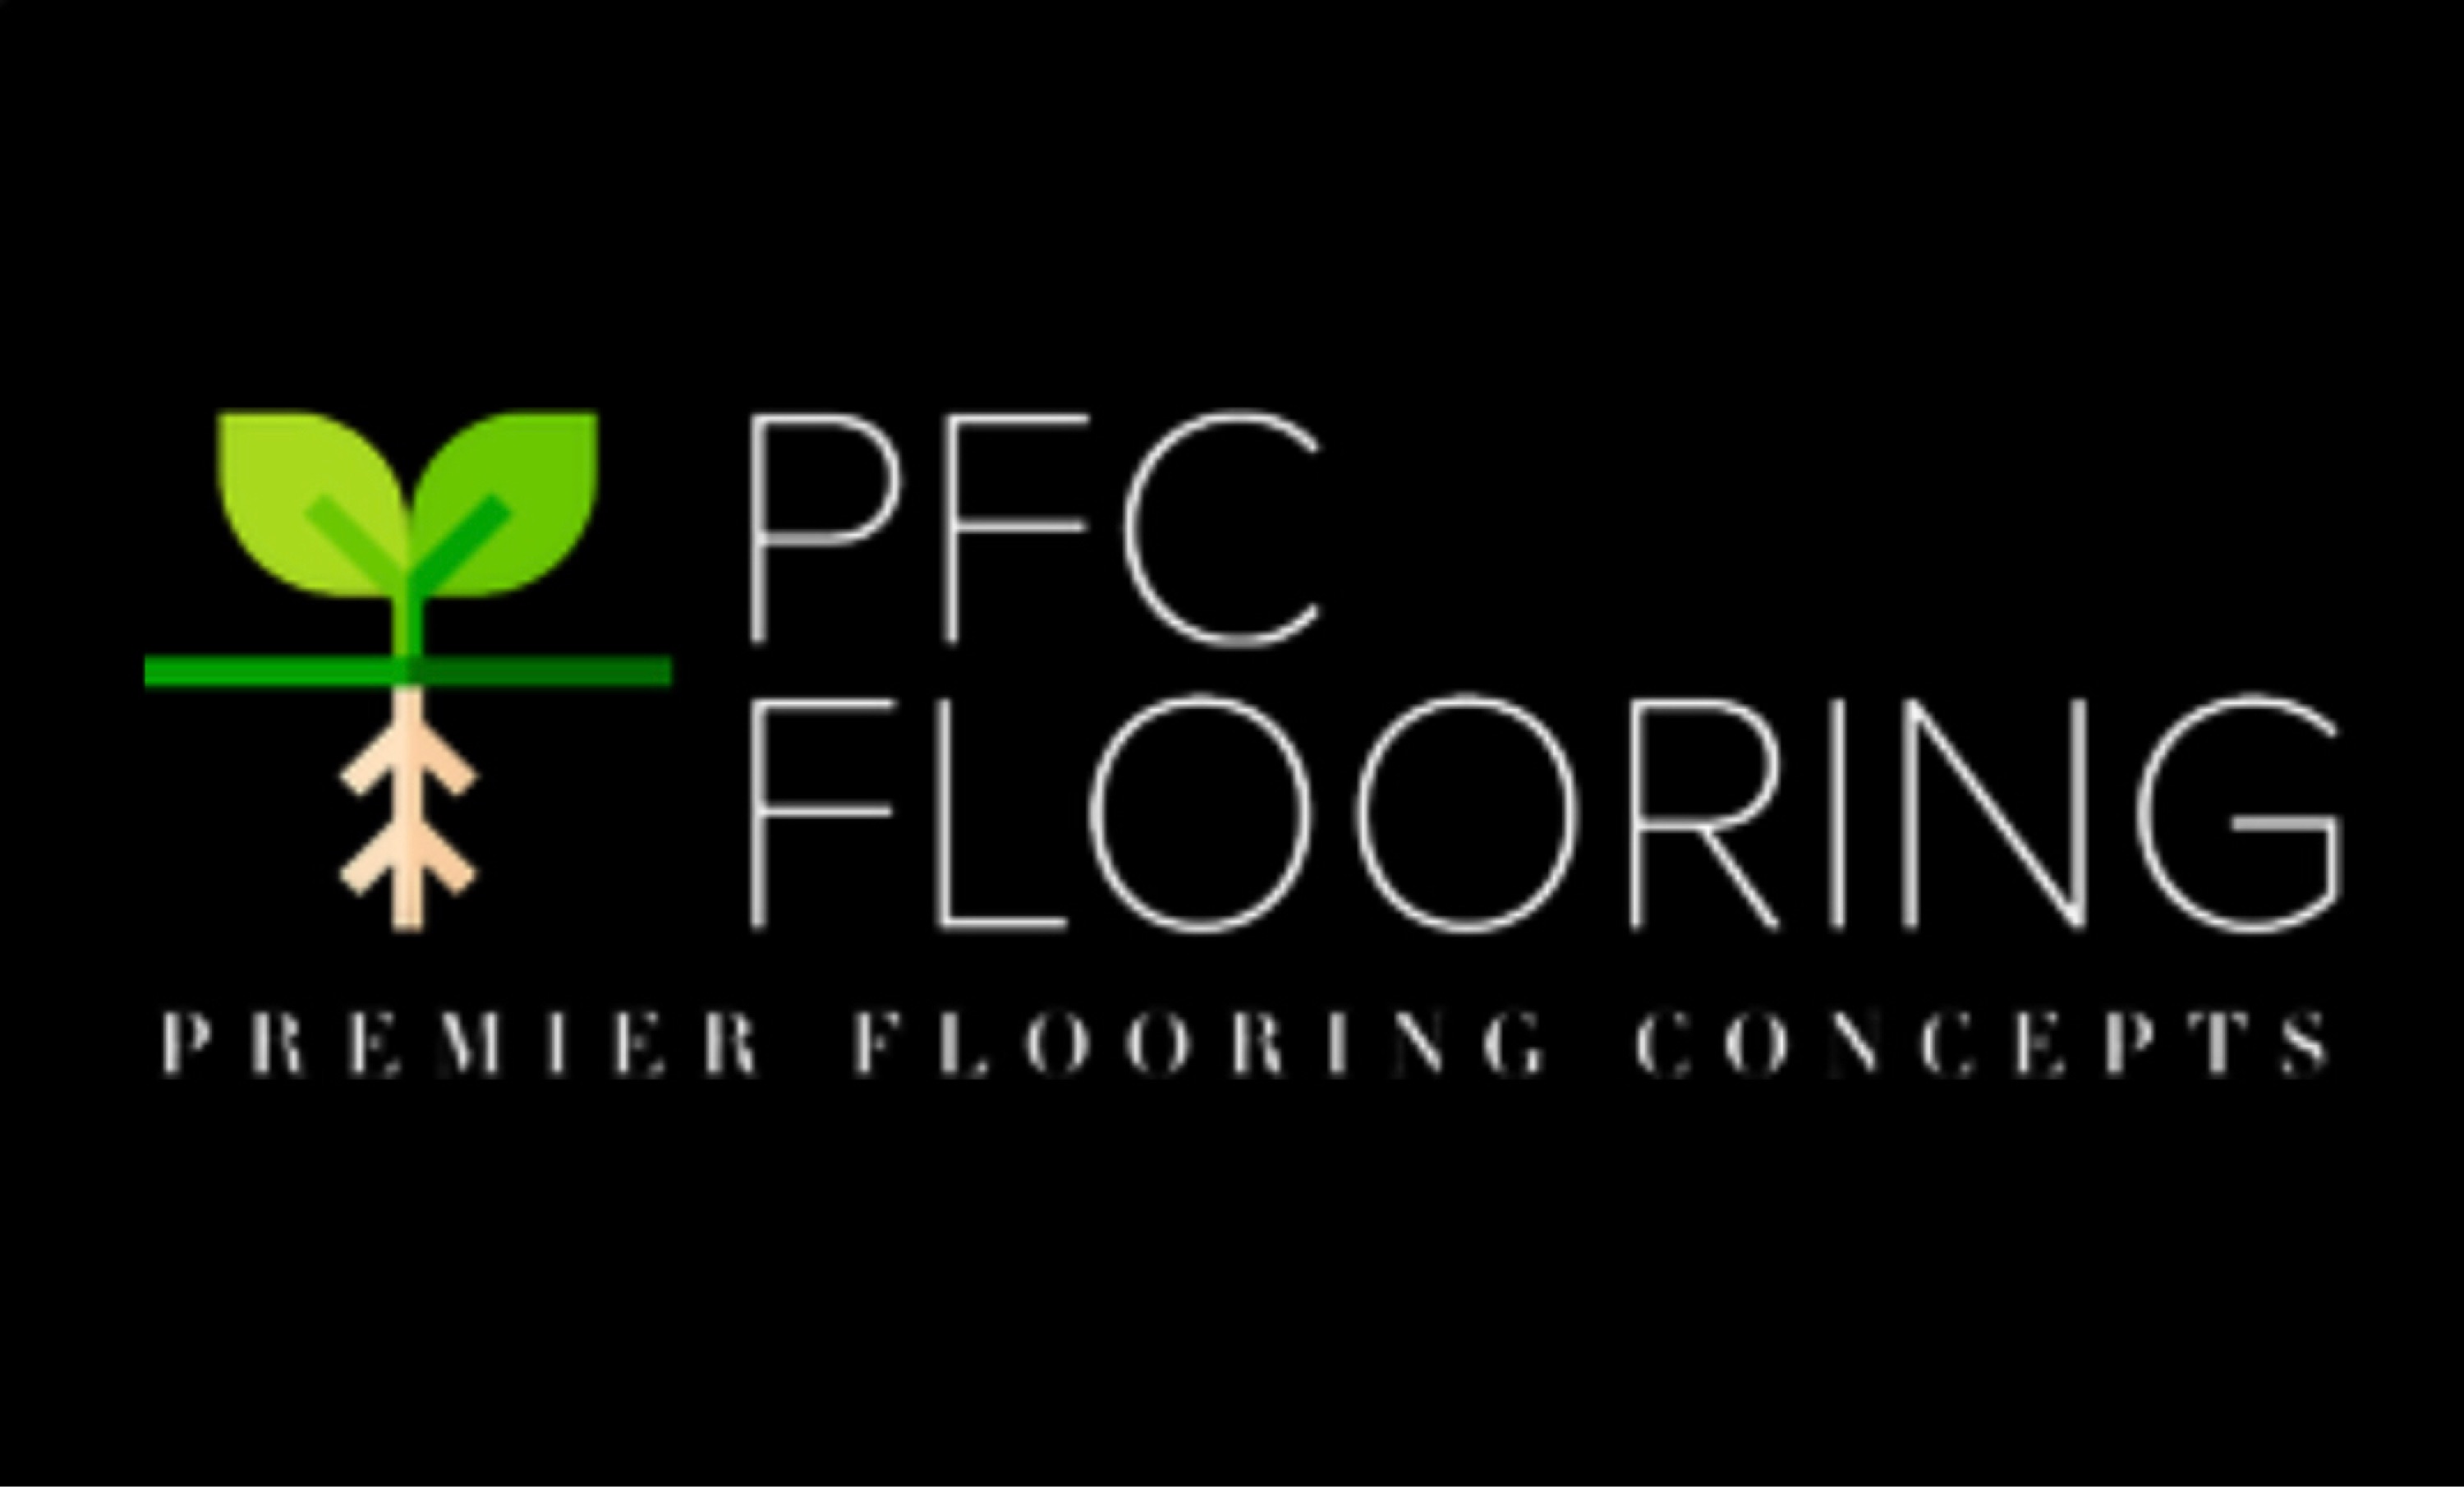 Premier Flooring Concepts Logo